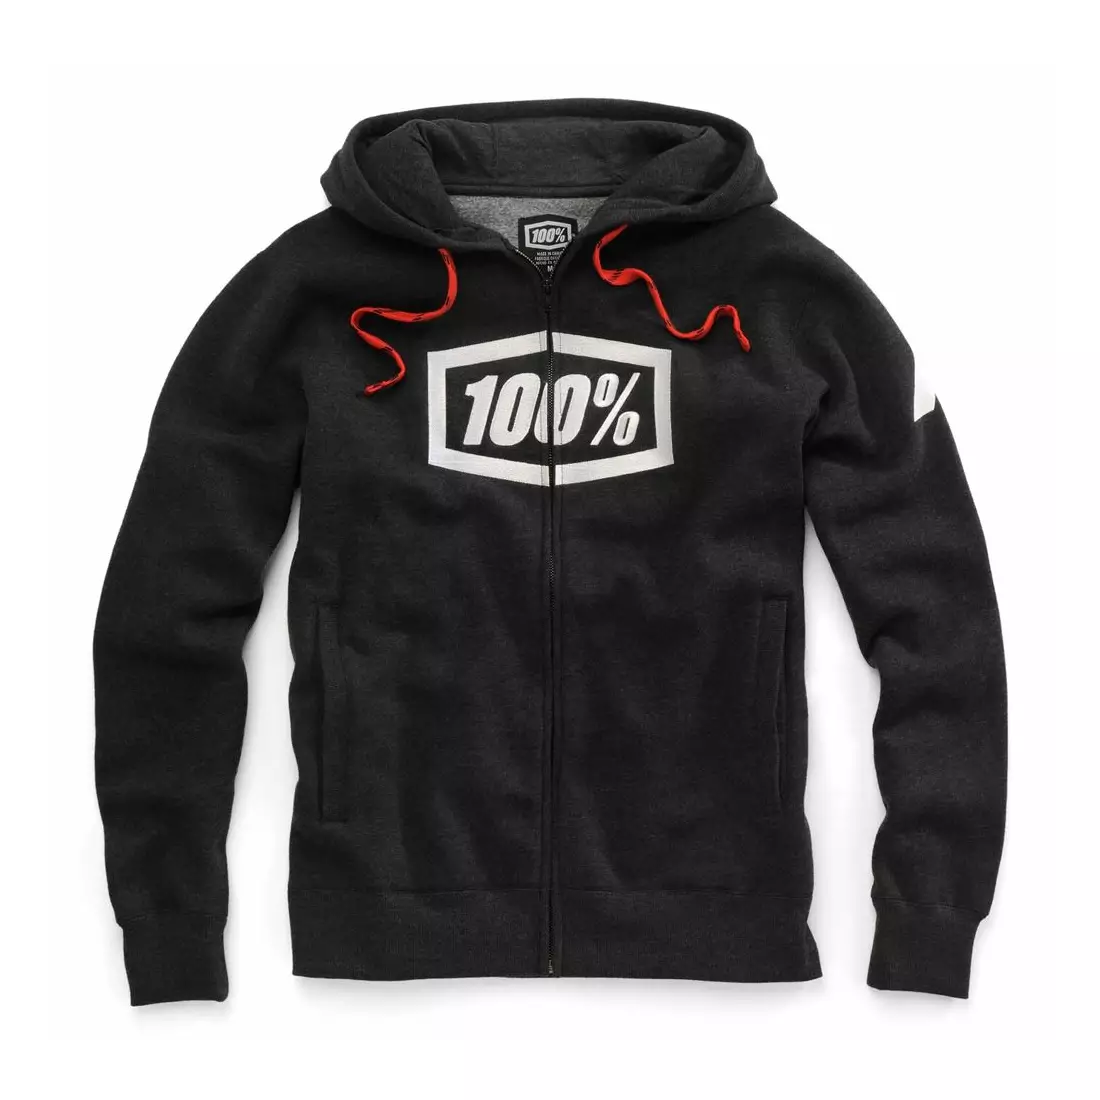 100% men's sports sweatshirt syndicate hooded zip black heather white STO-36017-181-10